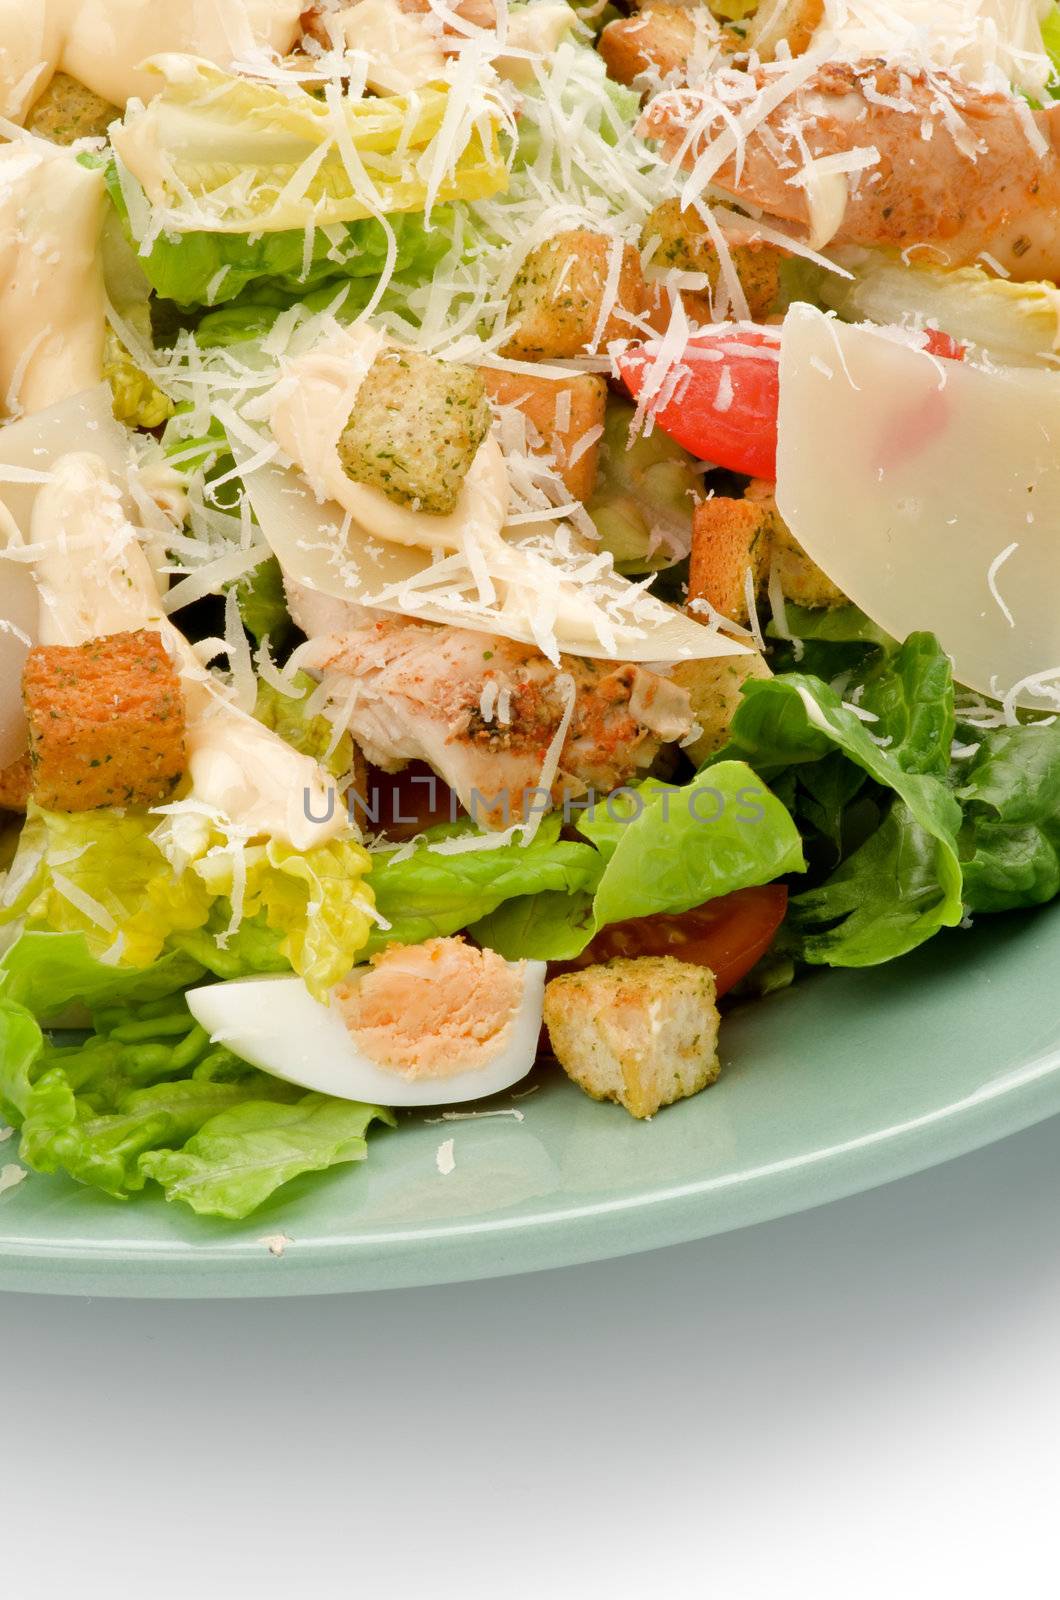 Caesar Salad by zhekos